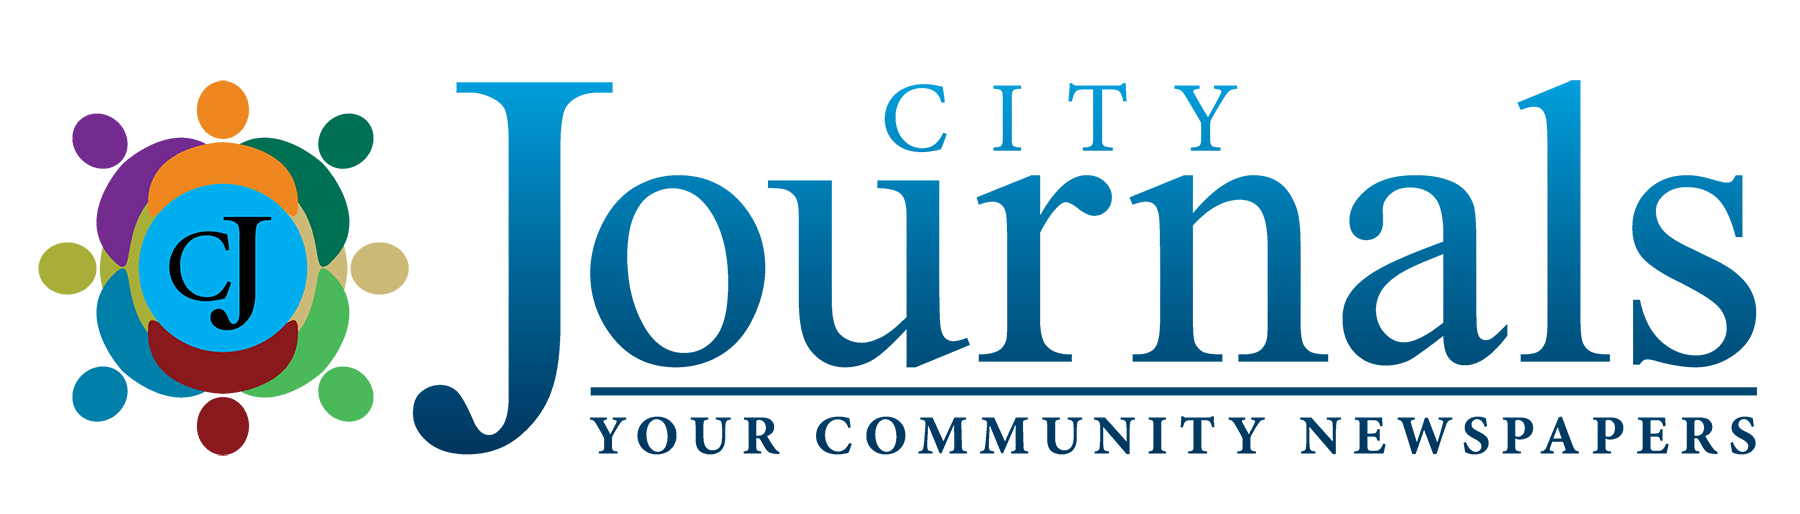 City Journals Logo